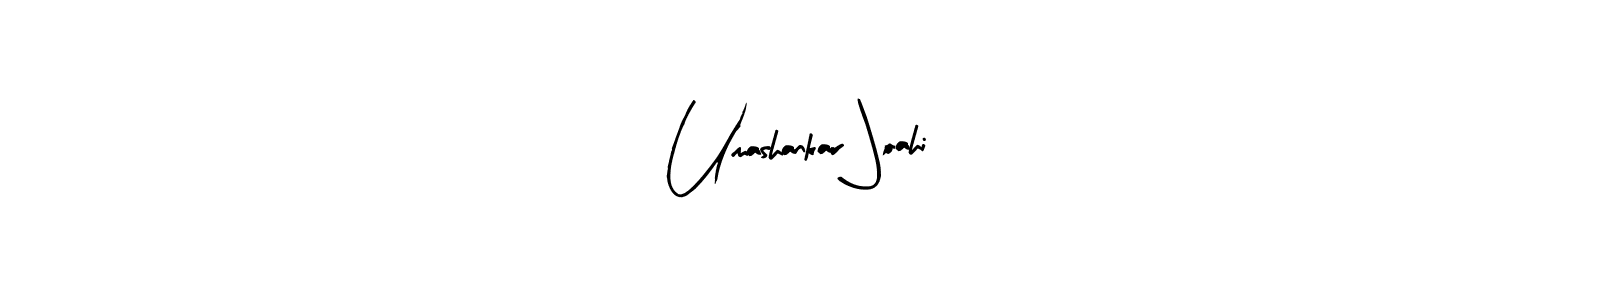 Umashankar Joahi stylish signature style. Best Handwritten Sign (Arty Signature) for my name. Handwritten Signature Collection Ideas for my name Umashankar Joahi. Umashankar Joahi signature style 8 images and pictures png